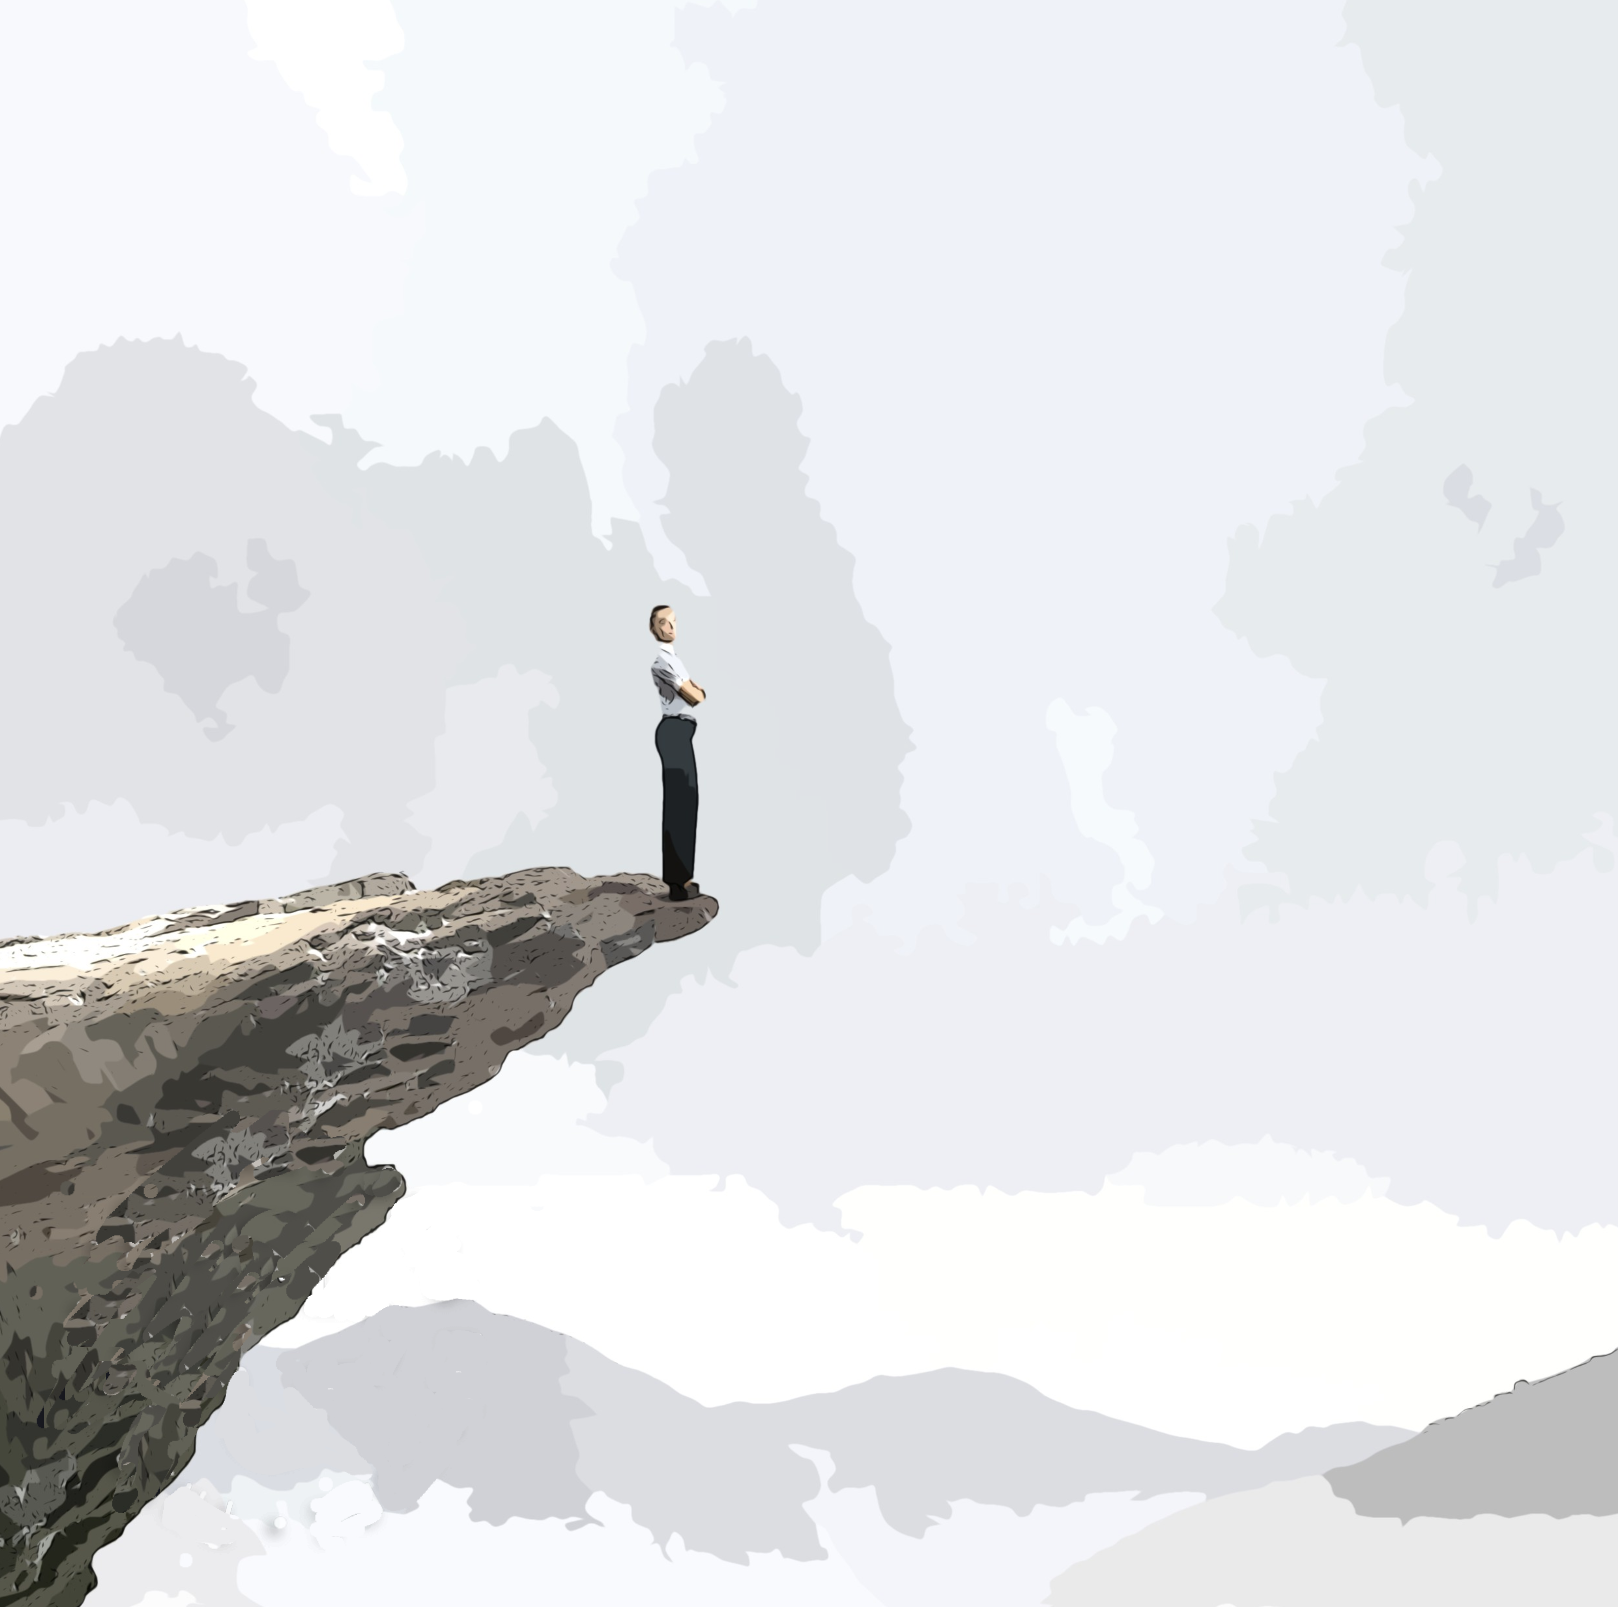 Person standing on a precipice in mountain scenery